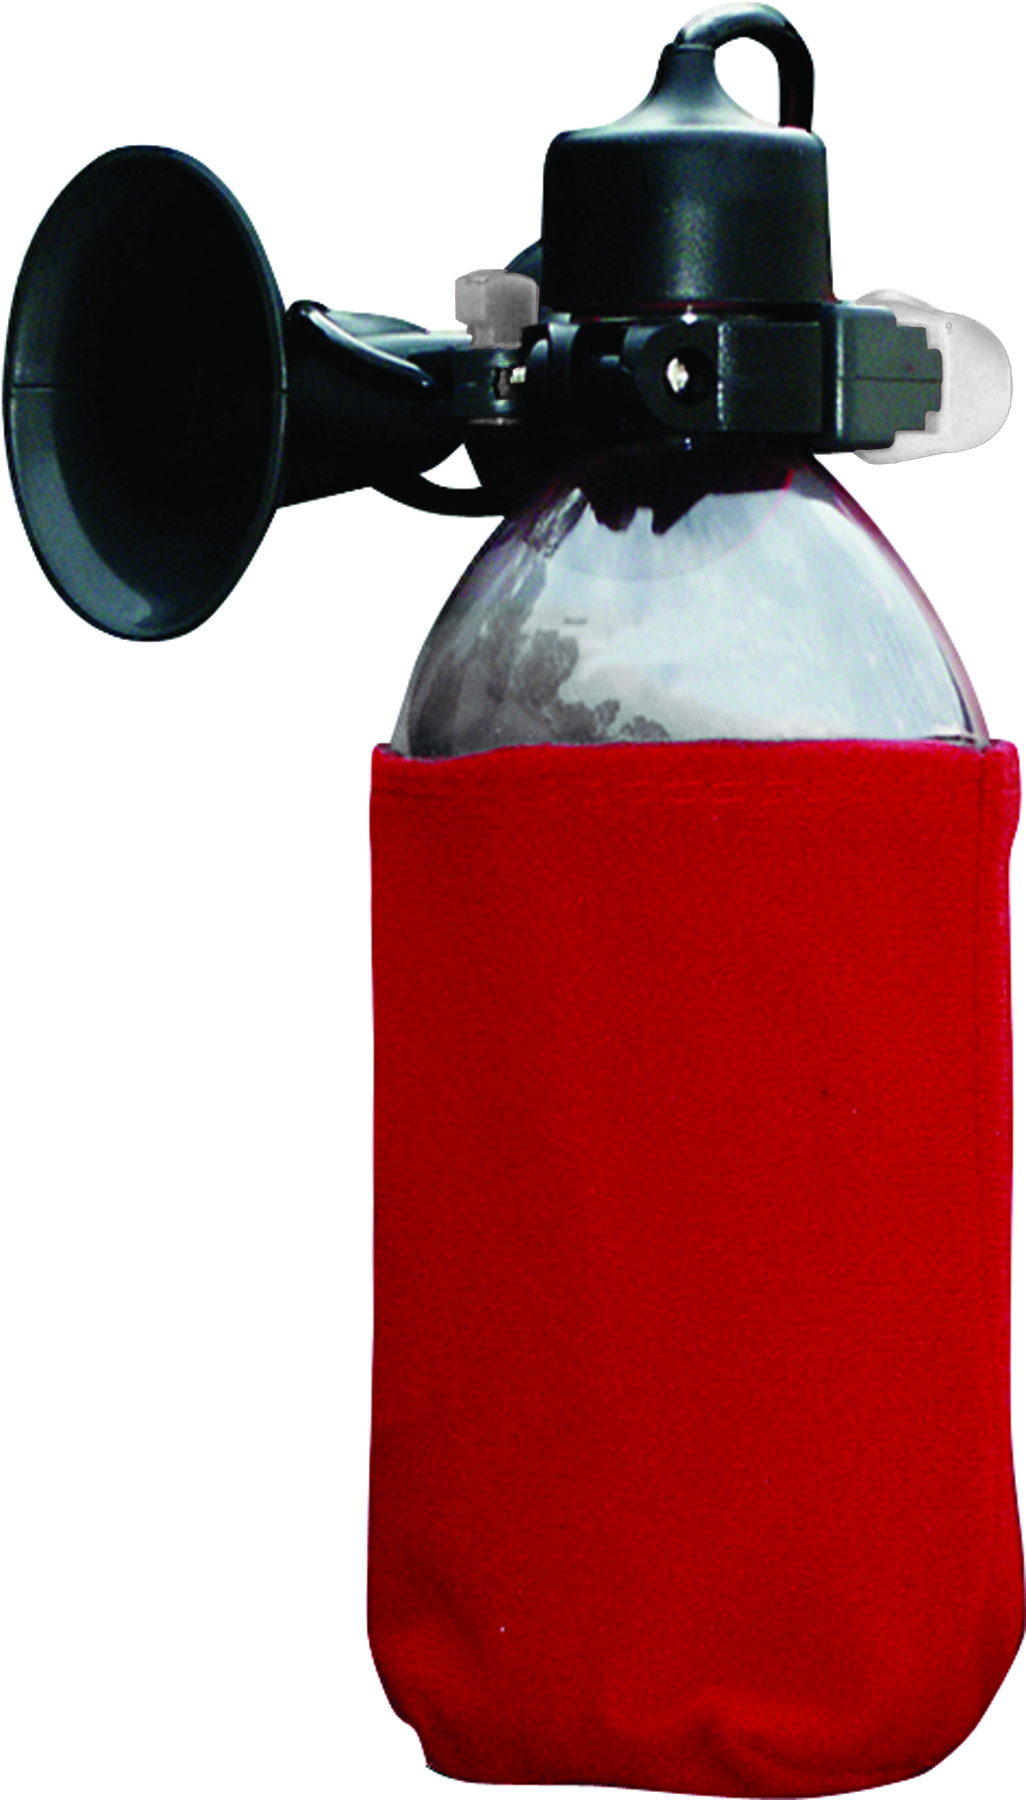 SeaSense Eco-Blast Refillable Air Horn - image 1 of 2